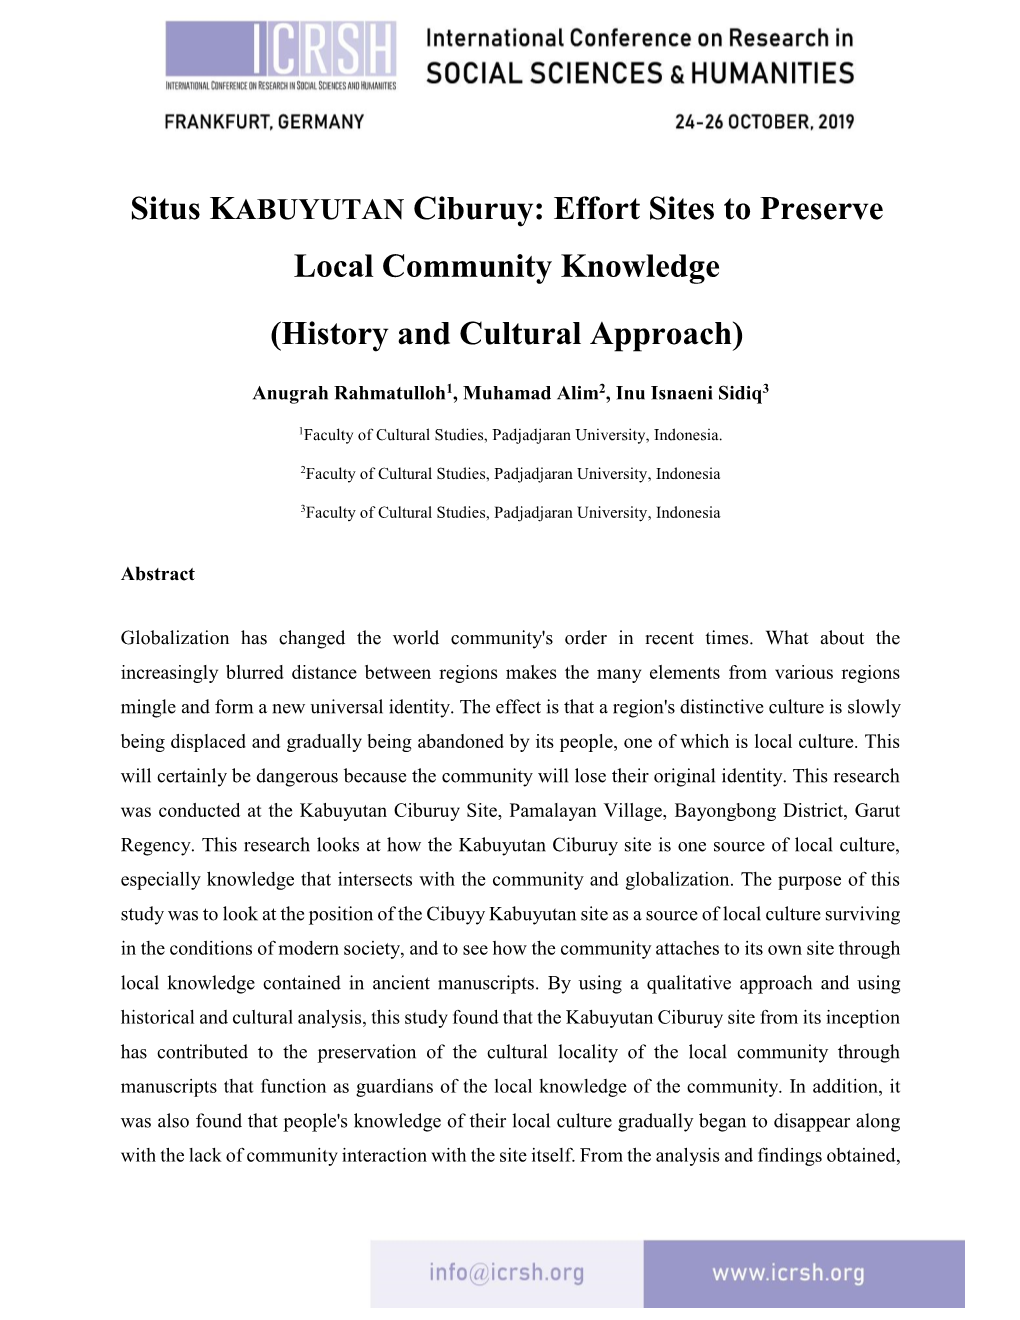 Situs KABUYUTAN Ciburuy: Effort Sites to Preserve Local Community Knowledge